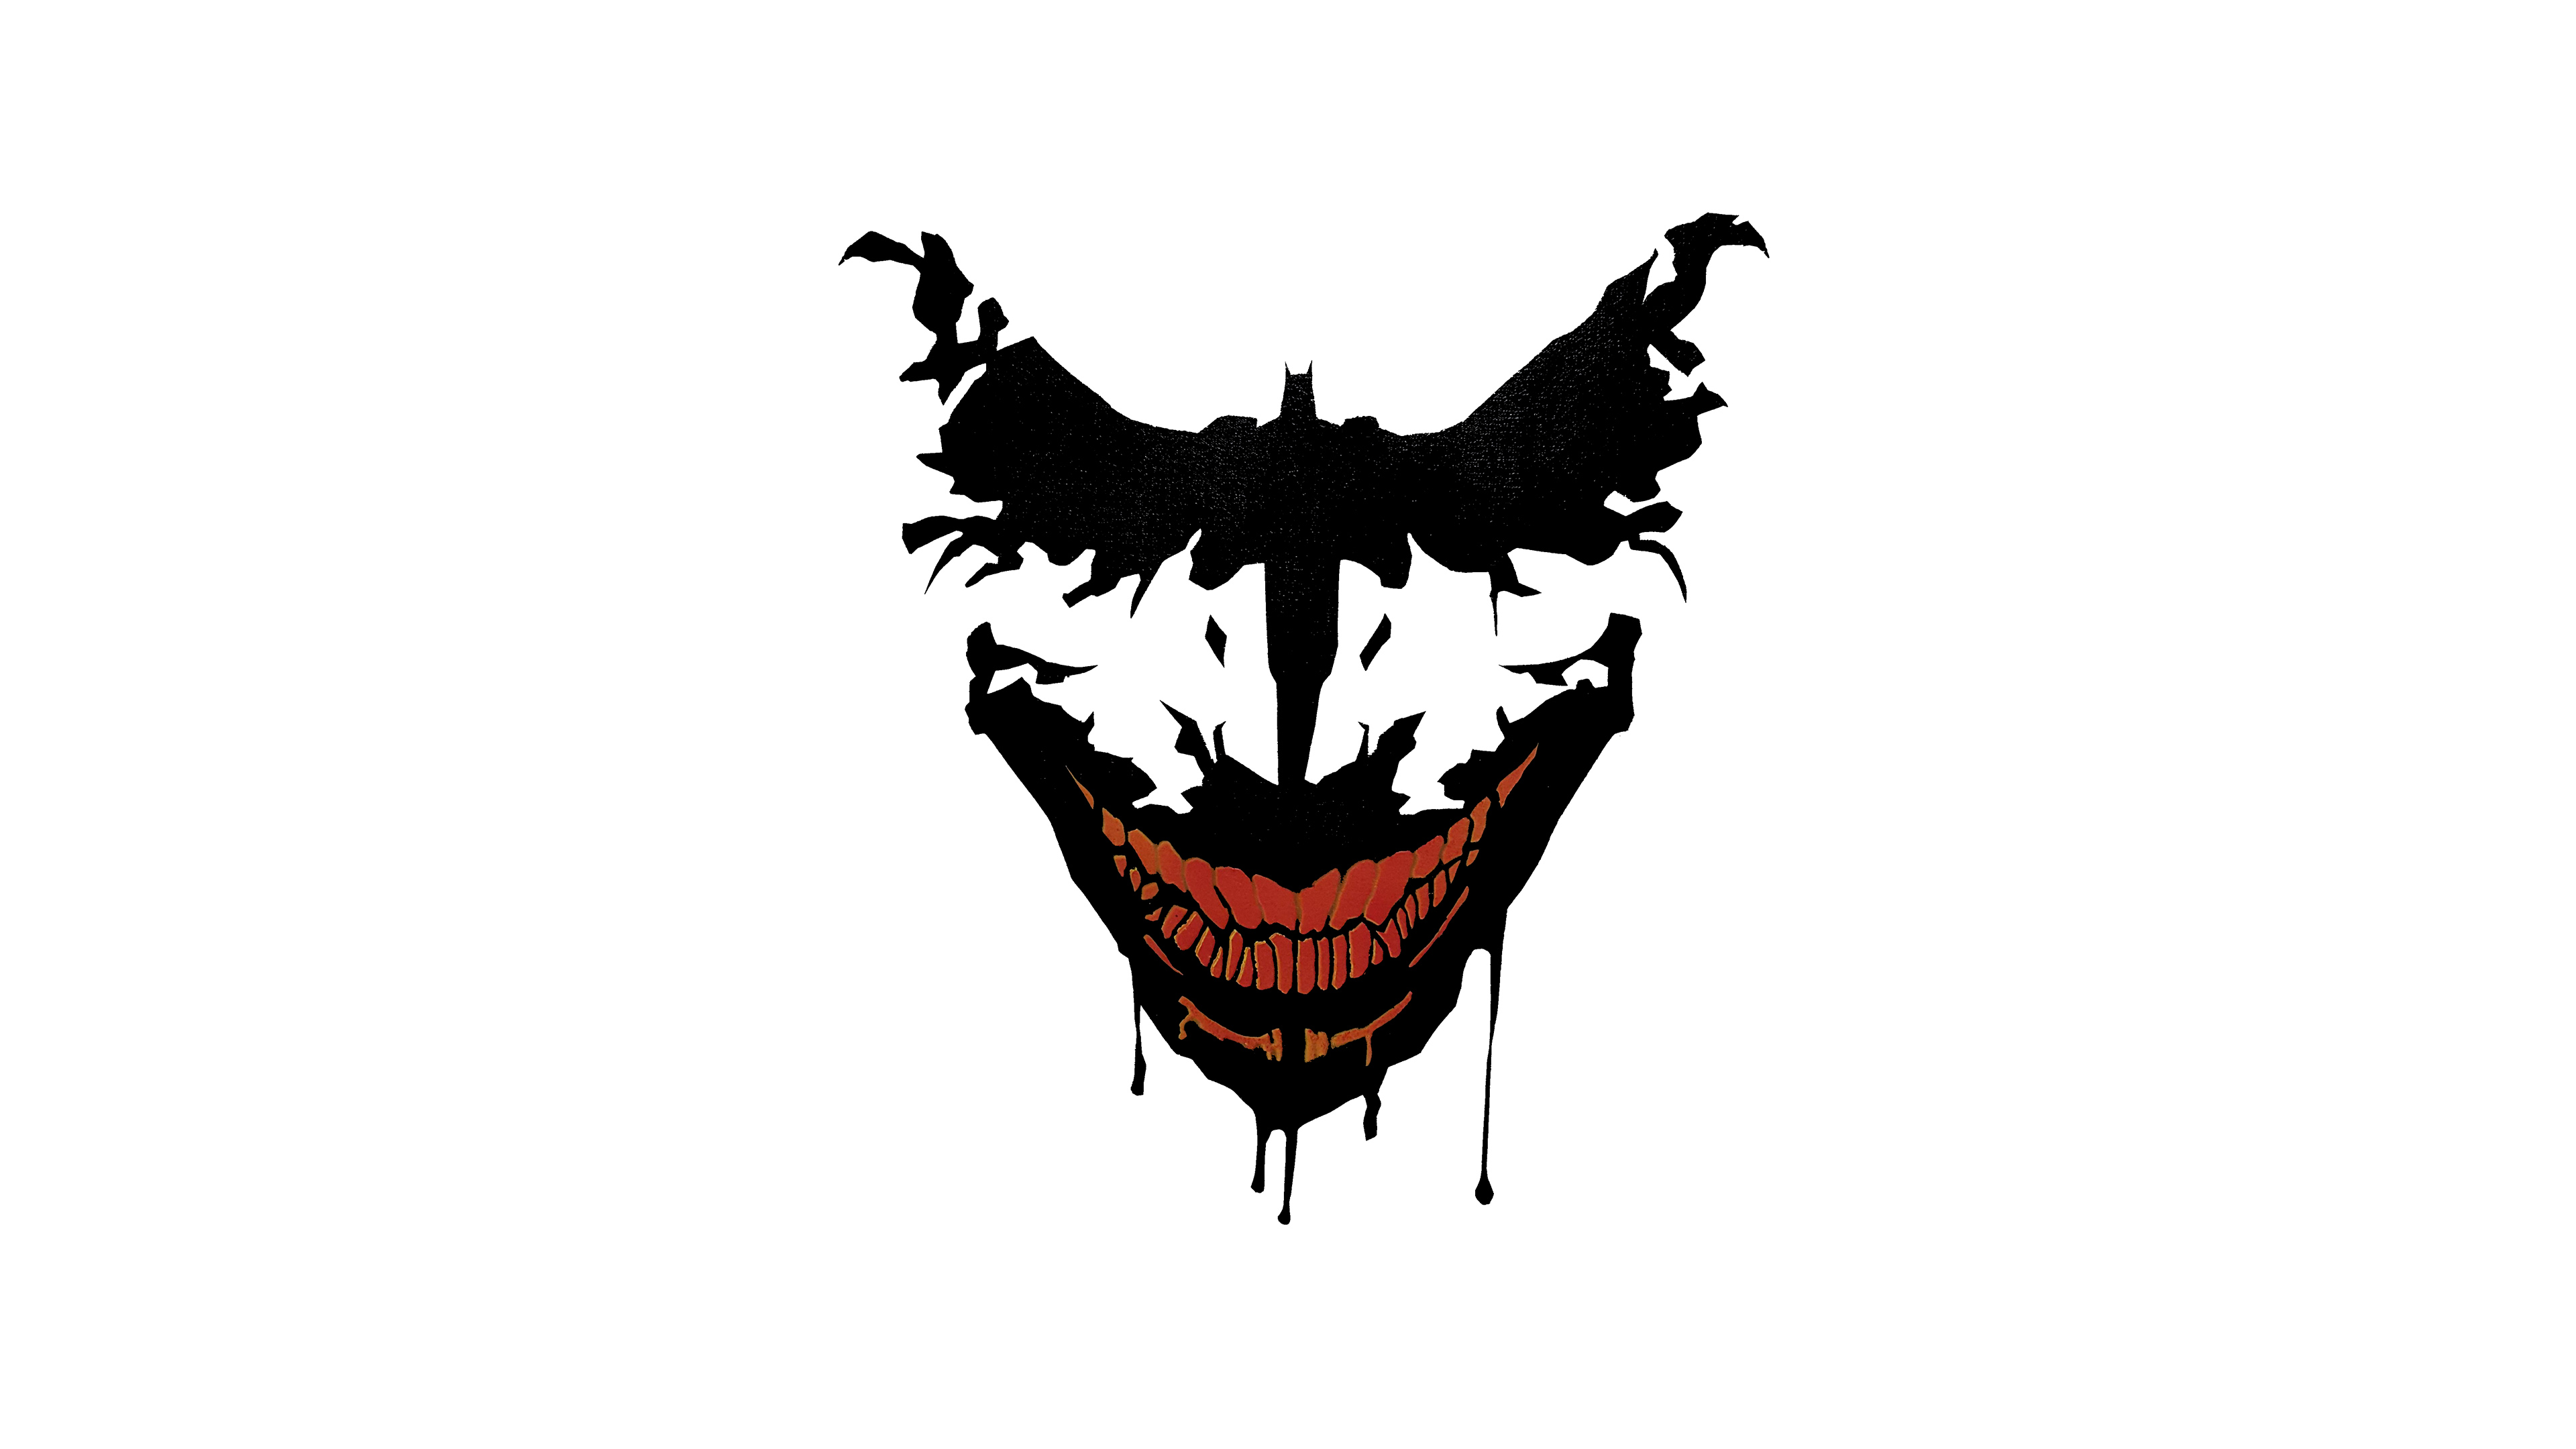  Joker  Bat Art 4k  superheroes wallpapers  joker  wallpapers  